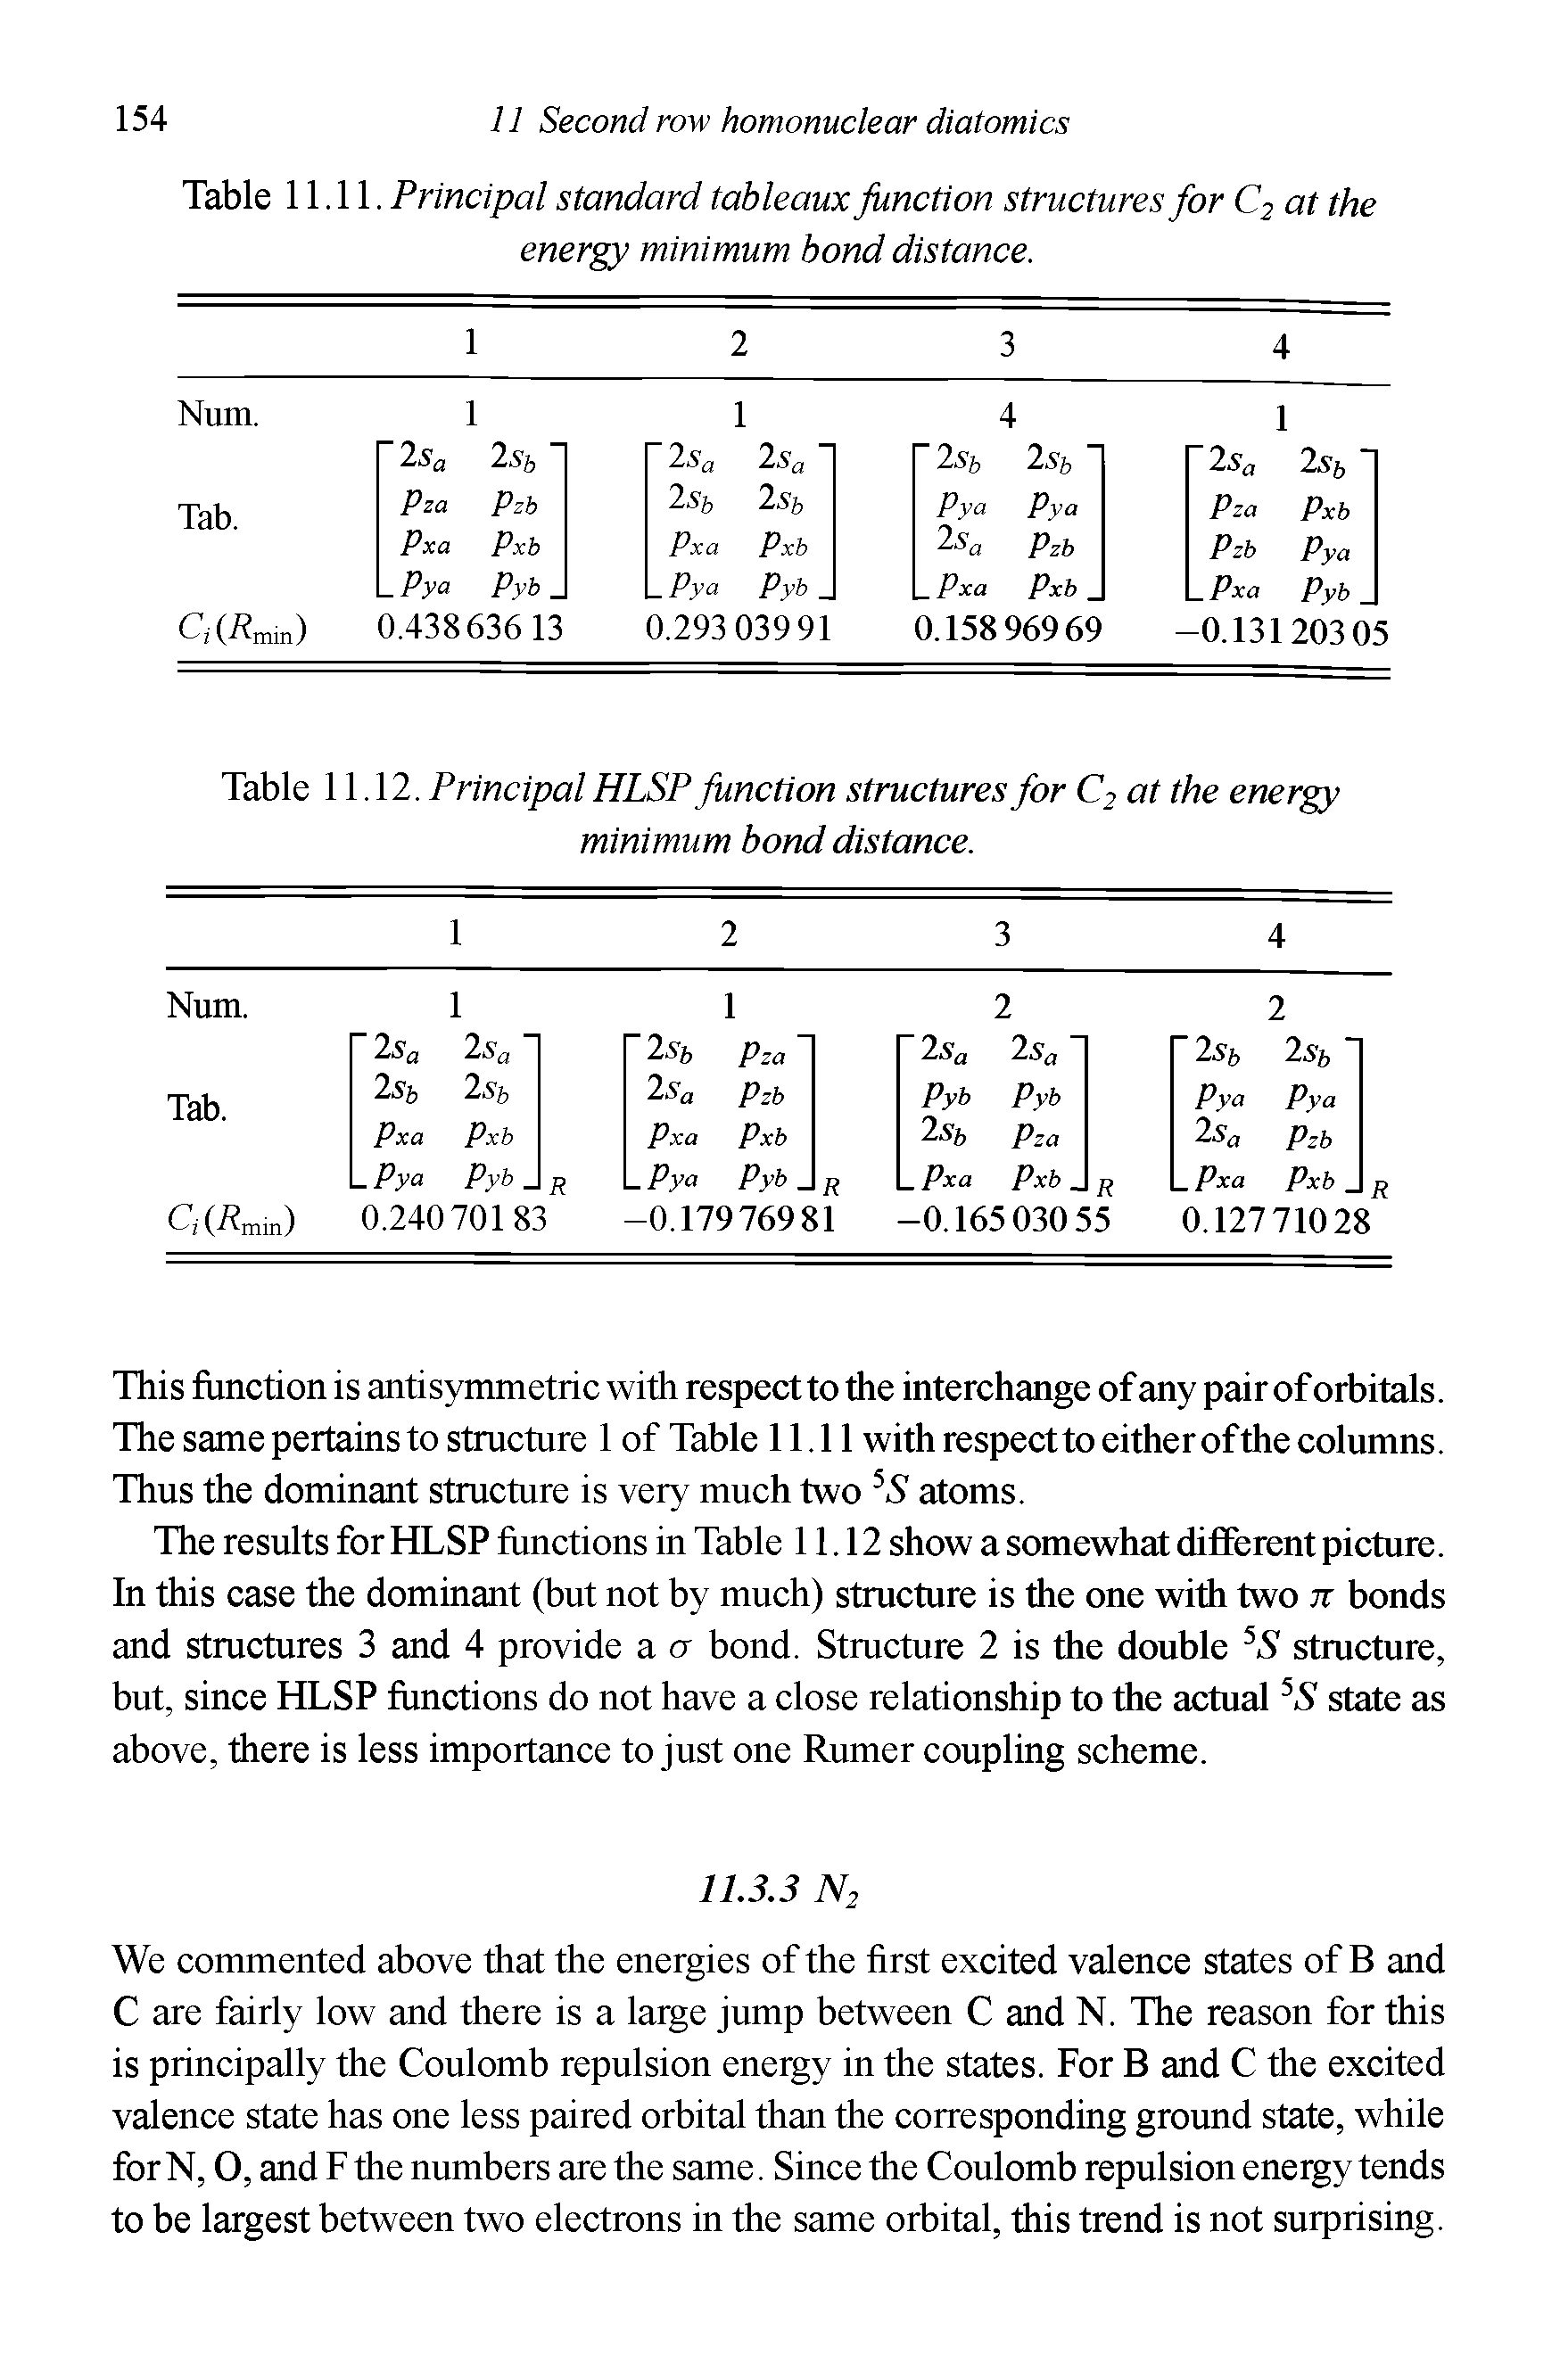 Table 11.11. Principal standard tableaux Junction structures for C2 at the energy minimum bond distance.